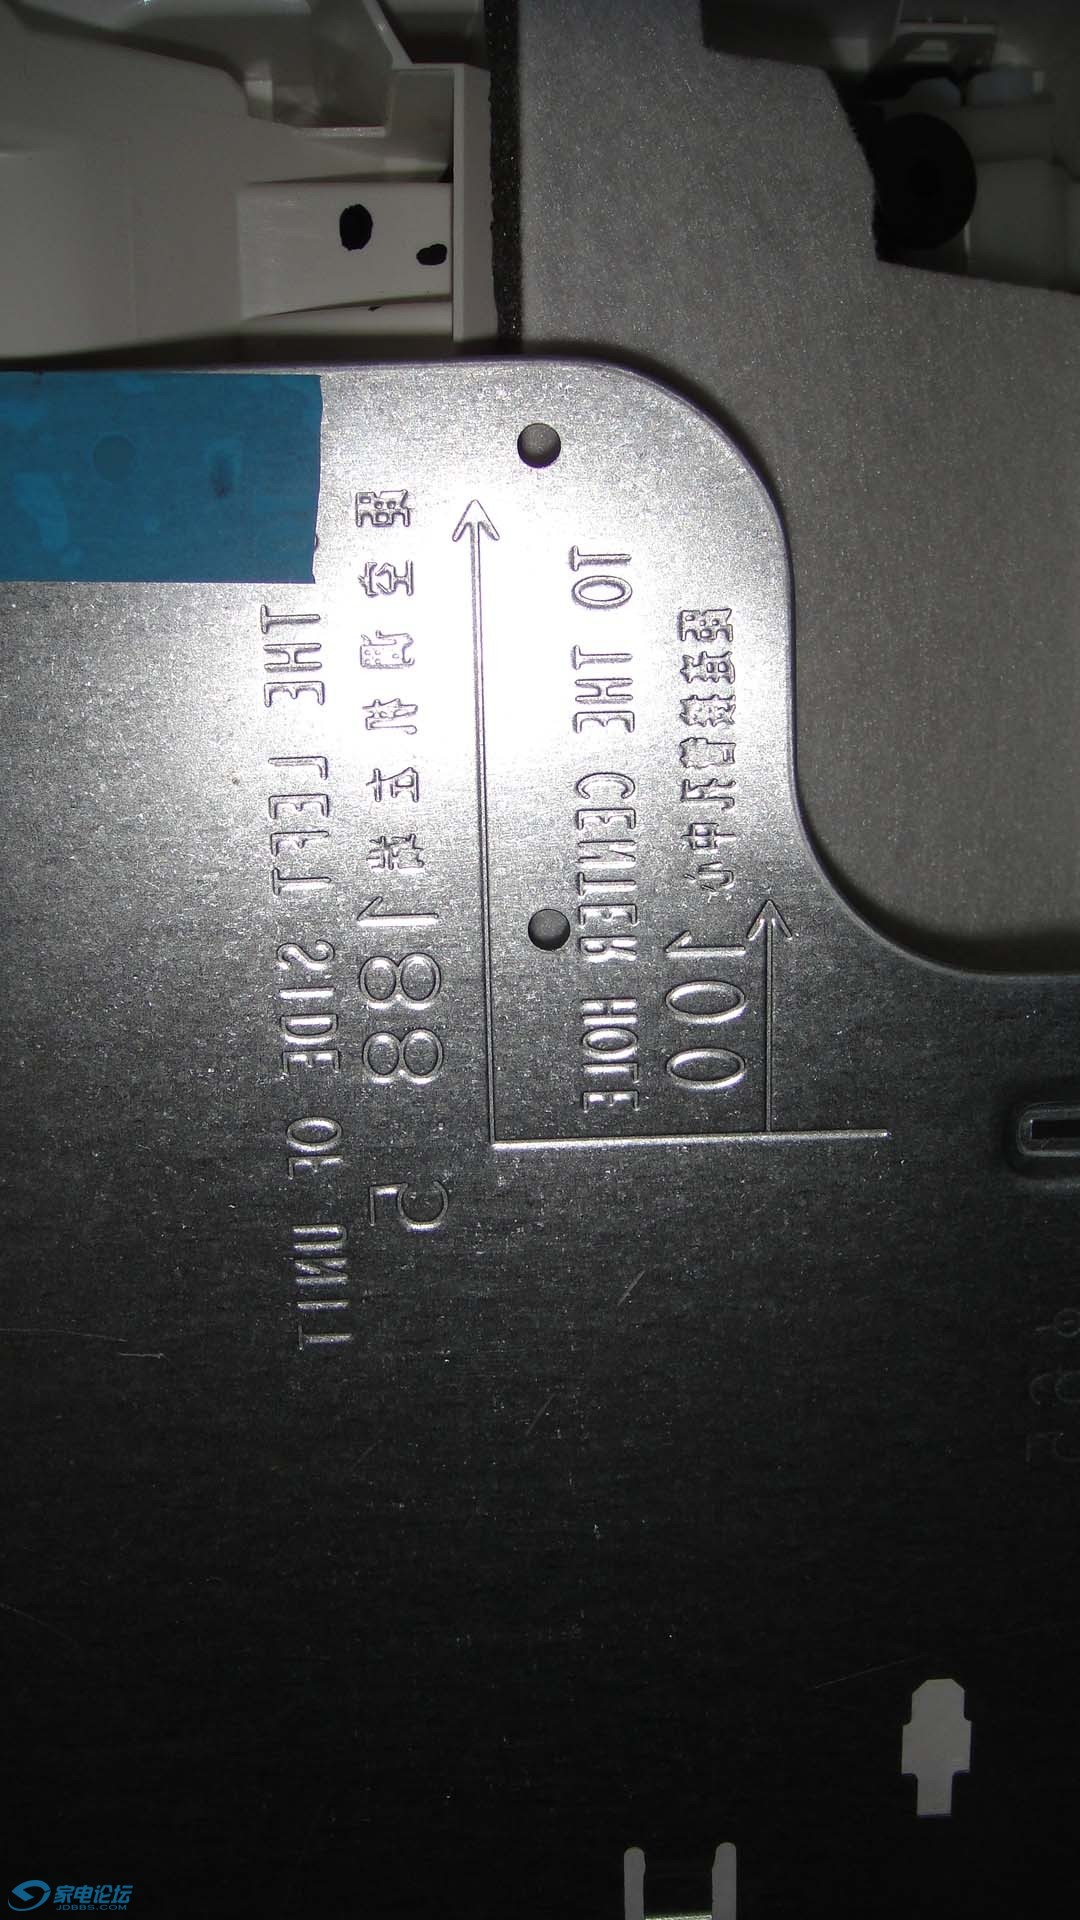 DSC02060.JPG